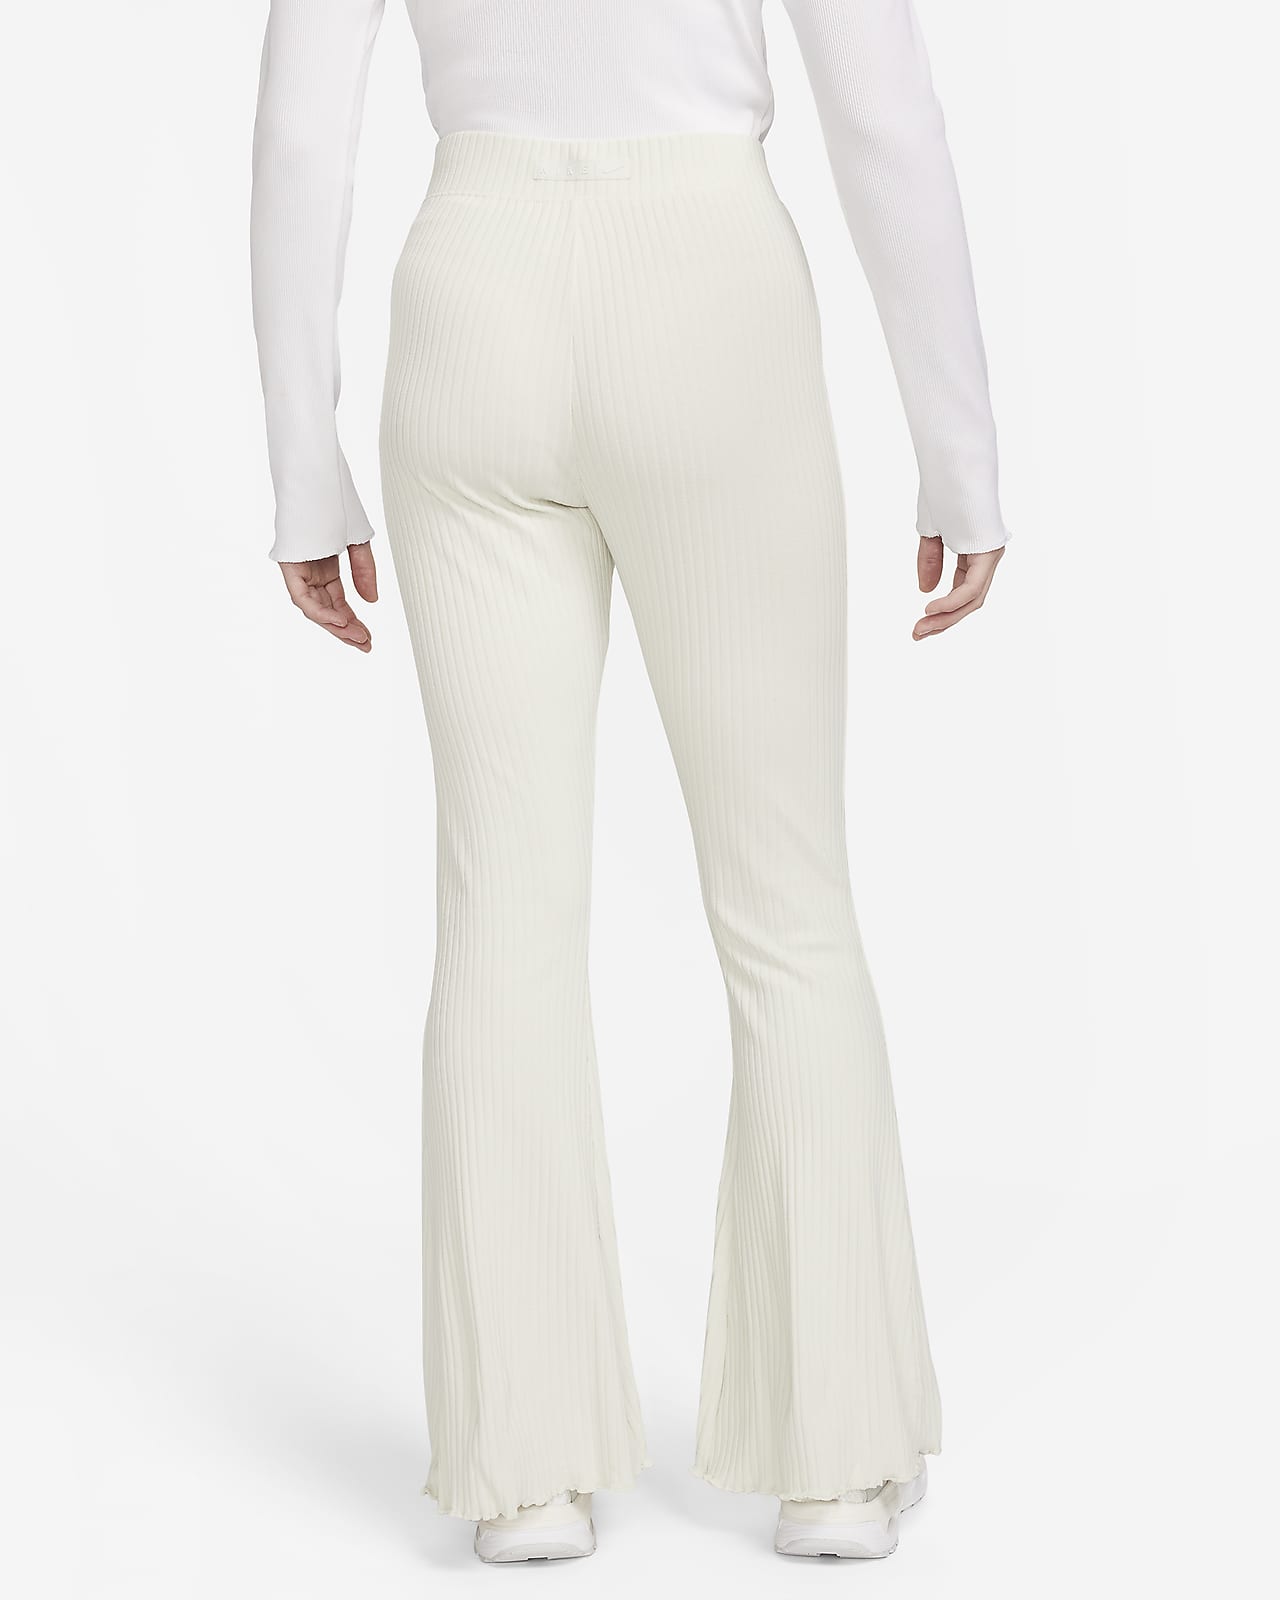 NIKE Sportswear Women's Jersey Capri Pants Sz SMALL Olive Flak CJ3748-368  NWT